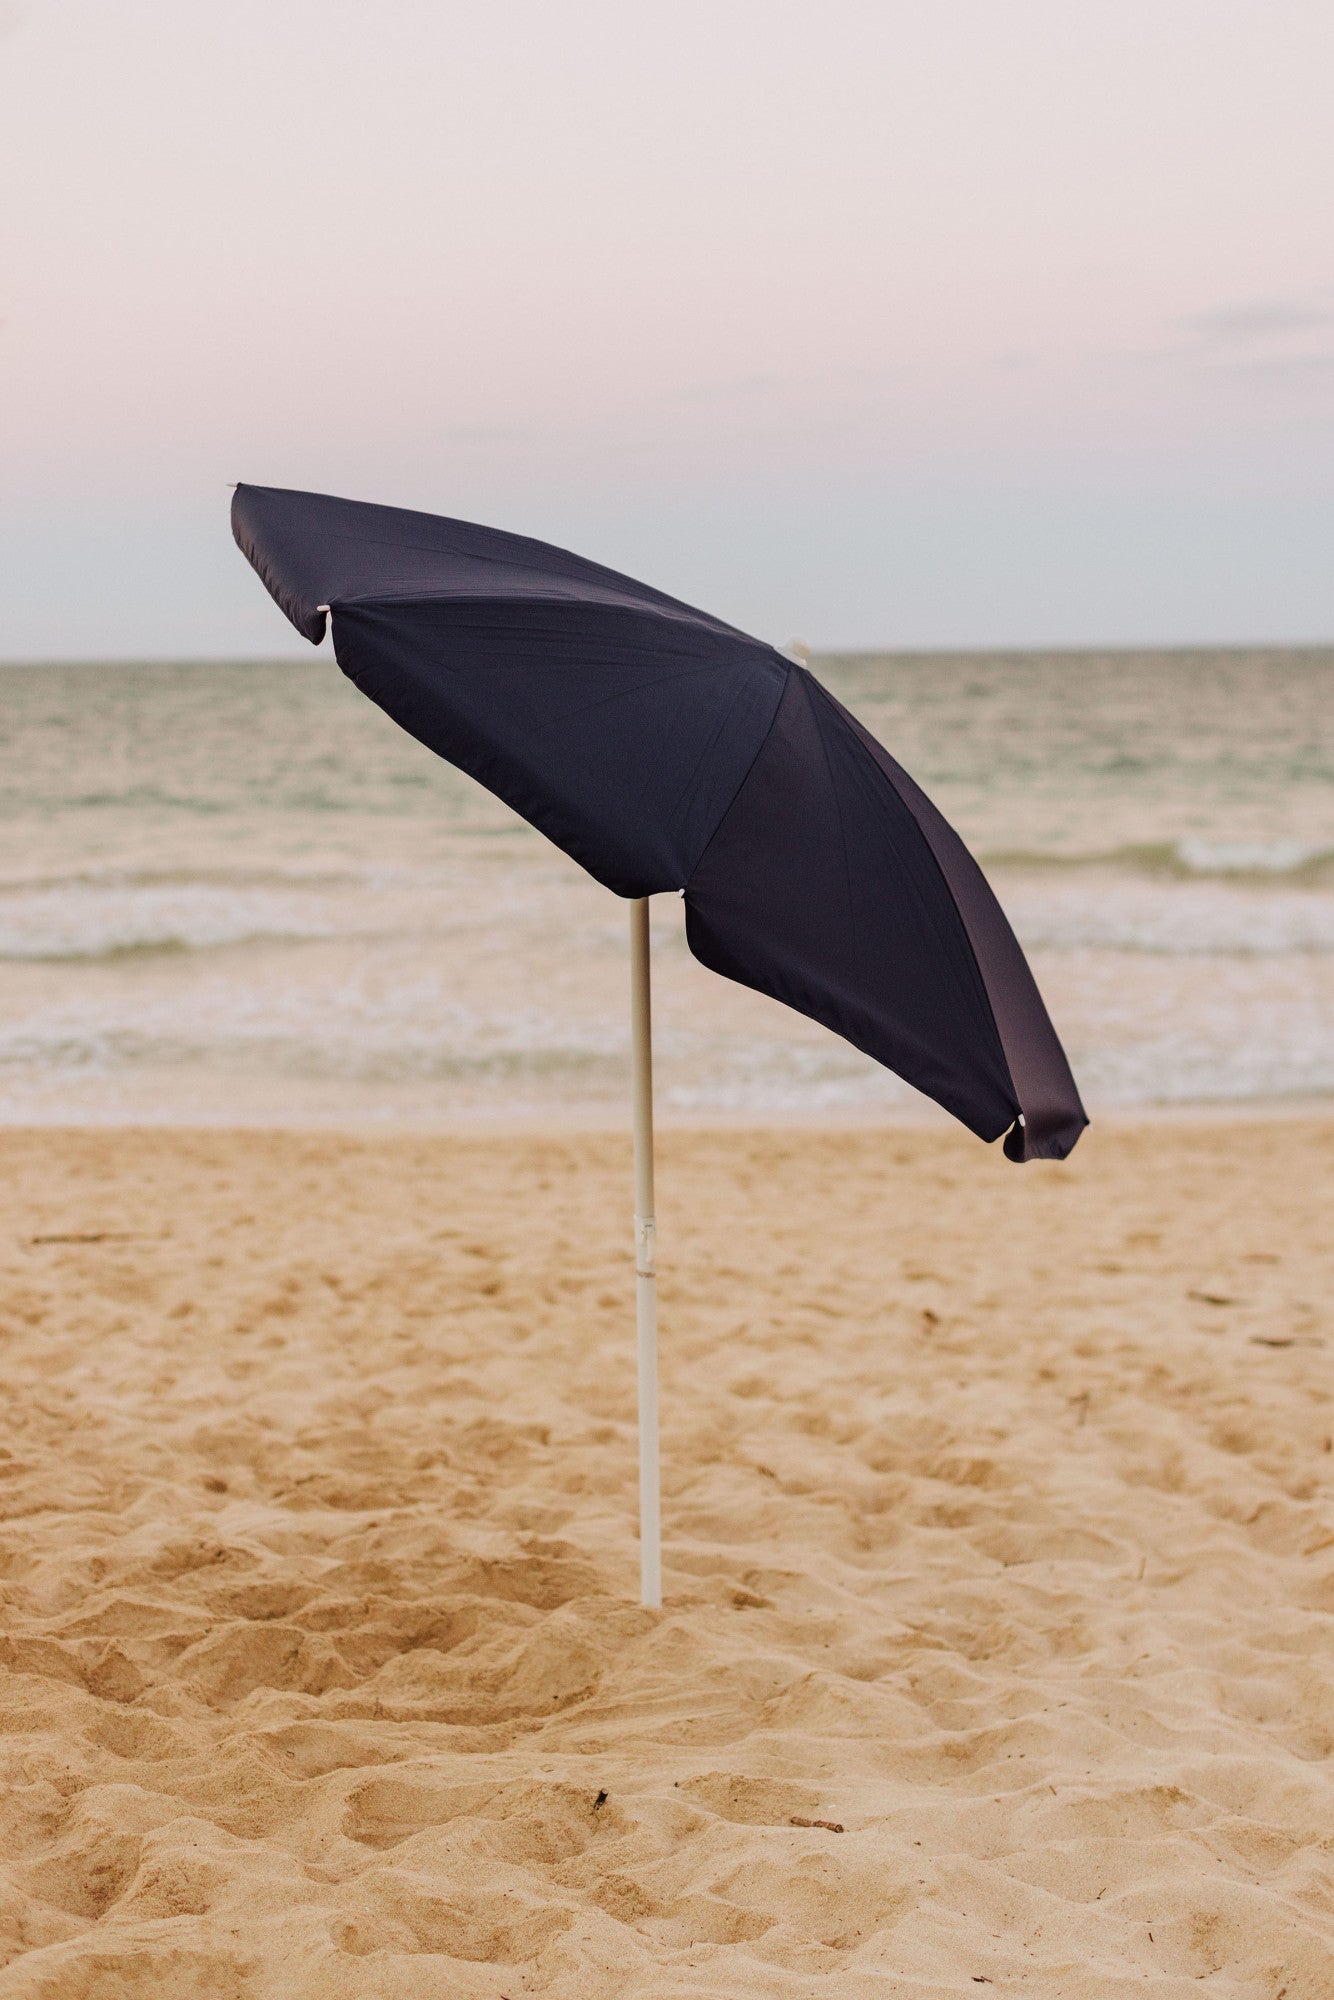 West Virginia Mountaineers - 5.5 Ft. Portable Beach Umbrella